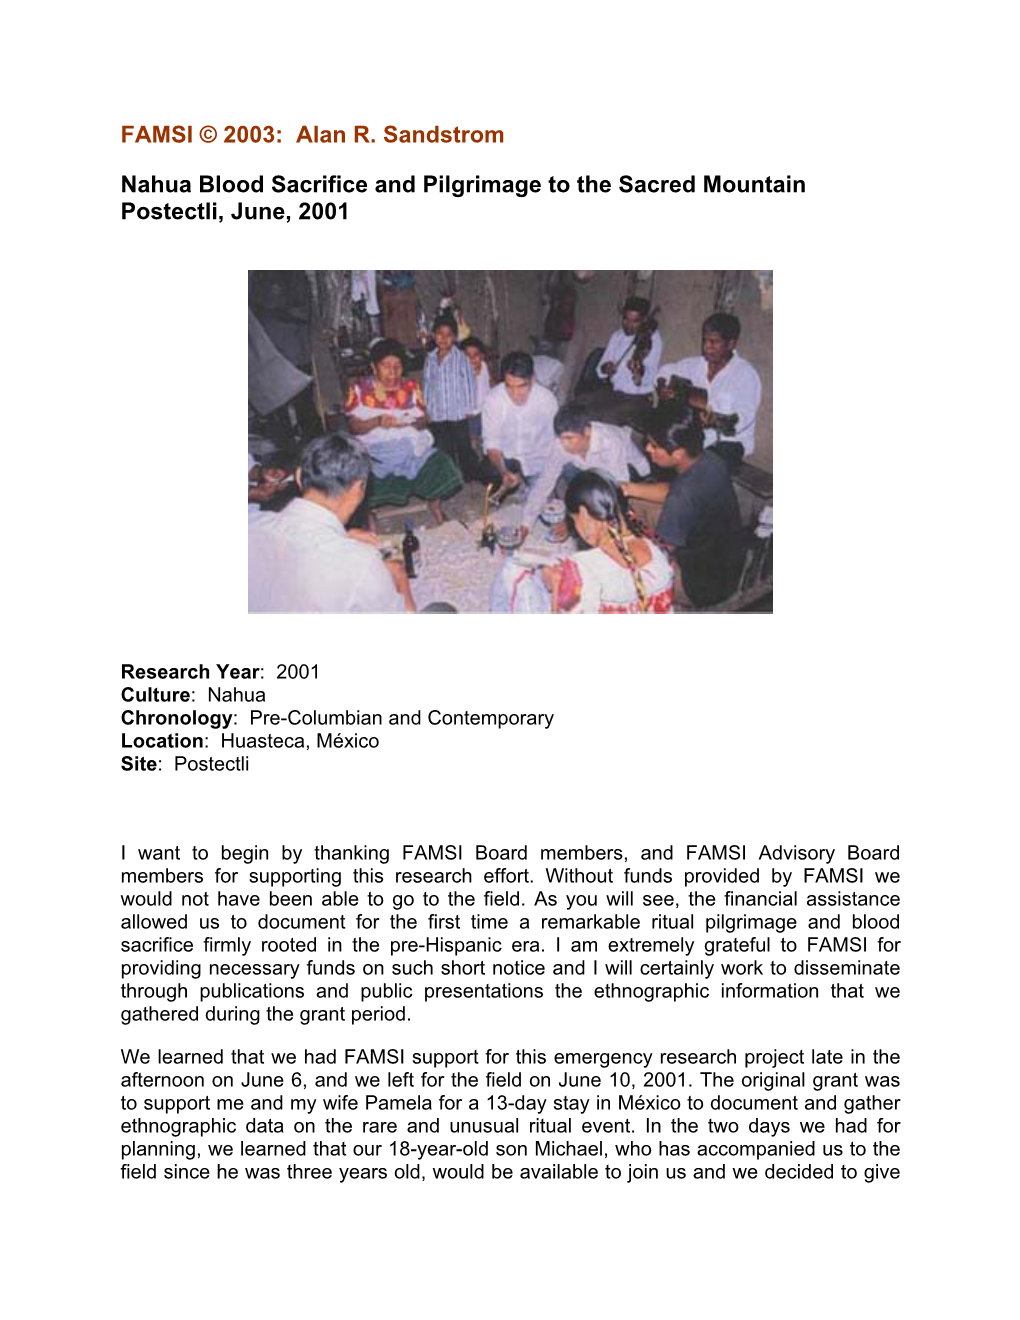 Nahua Blood Sacrifice and Pilgrimage to the Sacred Mountain Postectli, June, 2001